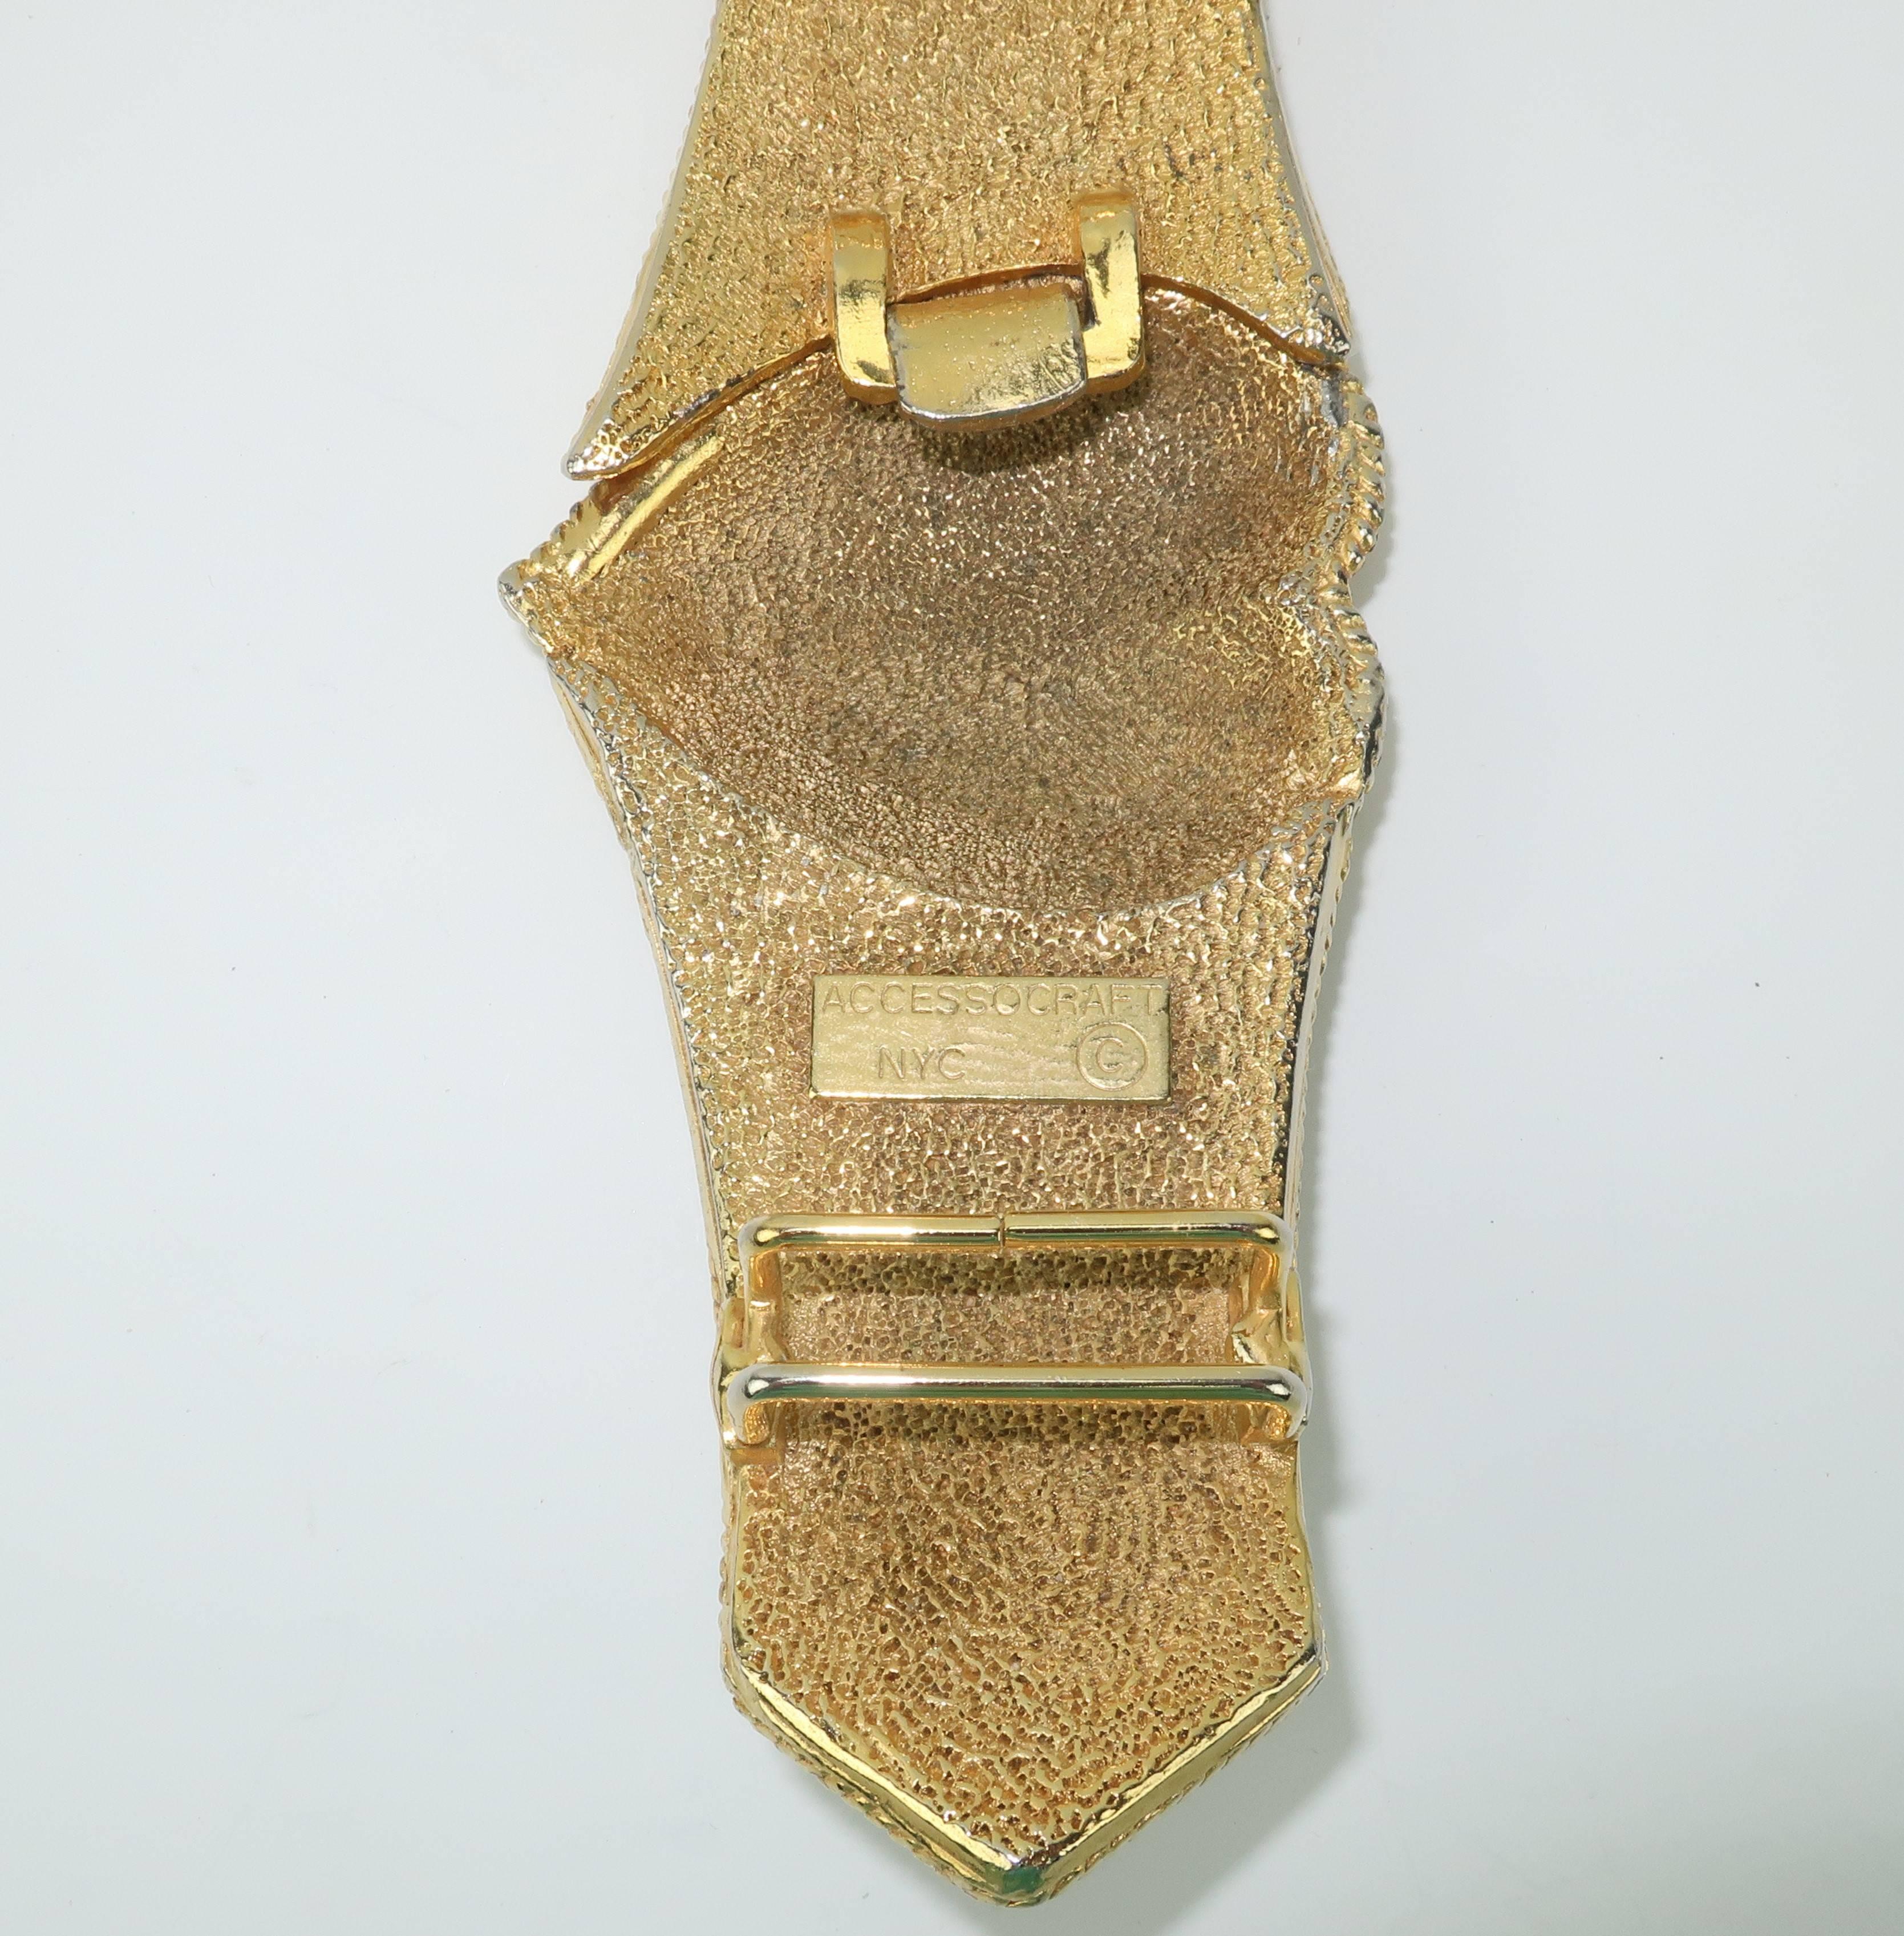 Vintage Accessocraft NYC Ornate Heart Buckle & Belt 3